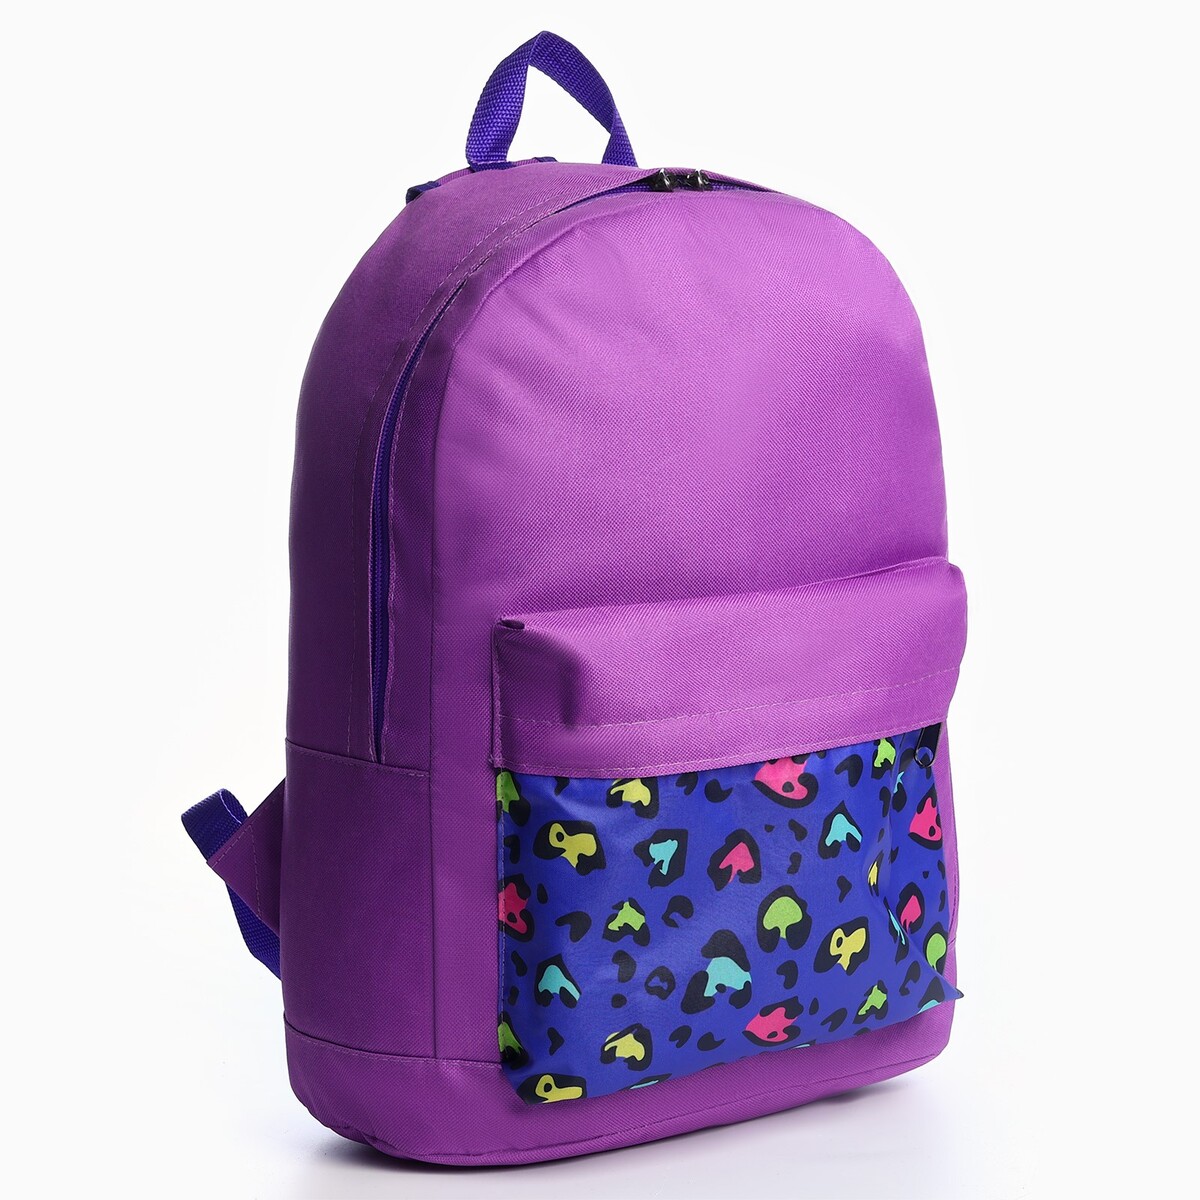 Рюкзак молод леопард, 33*13*37, отд на молнии, н/карман, фиолетовый рюкзак молодежный на молнии наружный карман фиолетовый